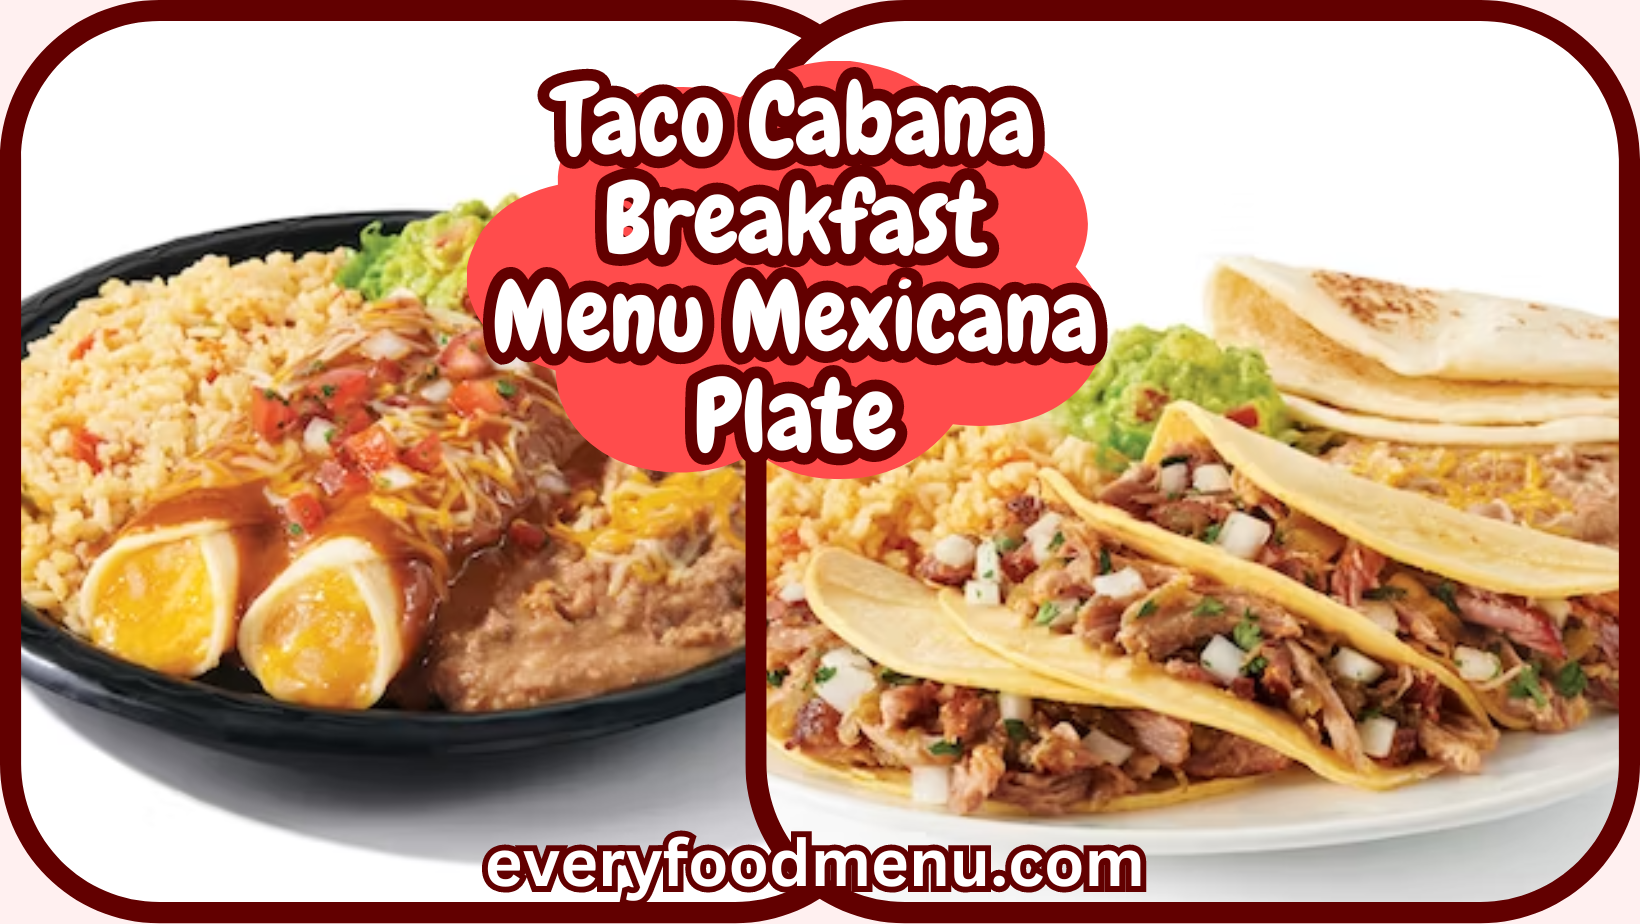 Taco Cabana Breakfast Menu Mexicana Plate